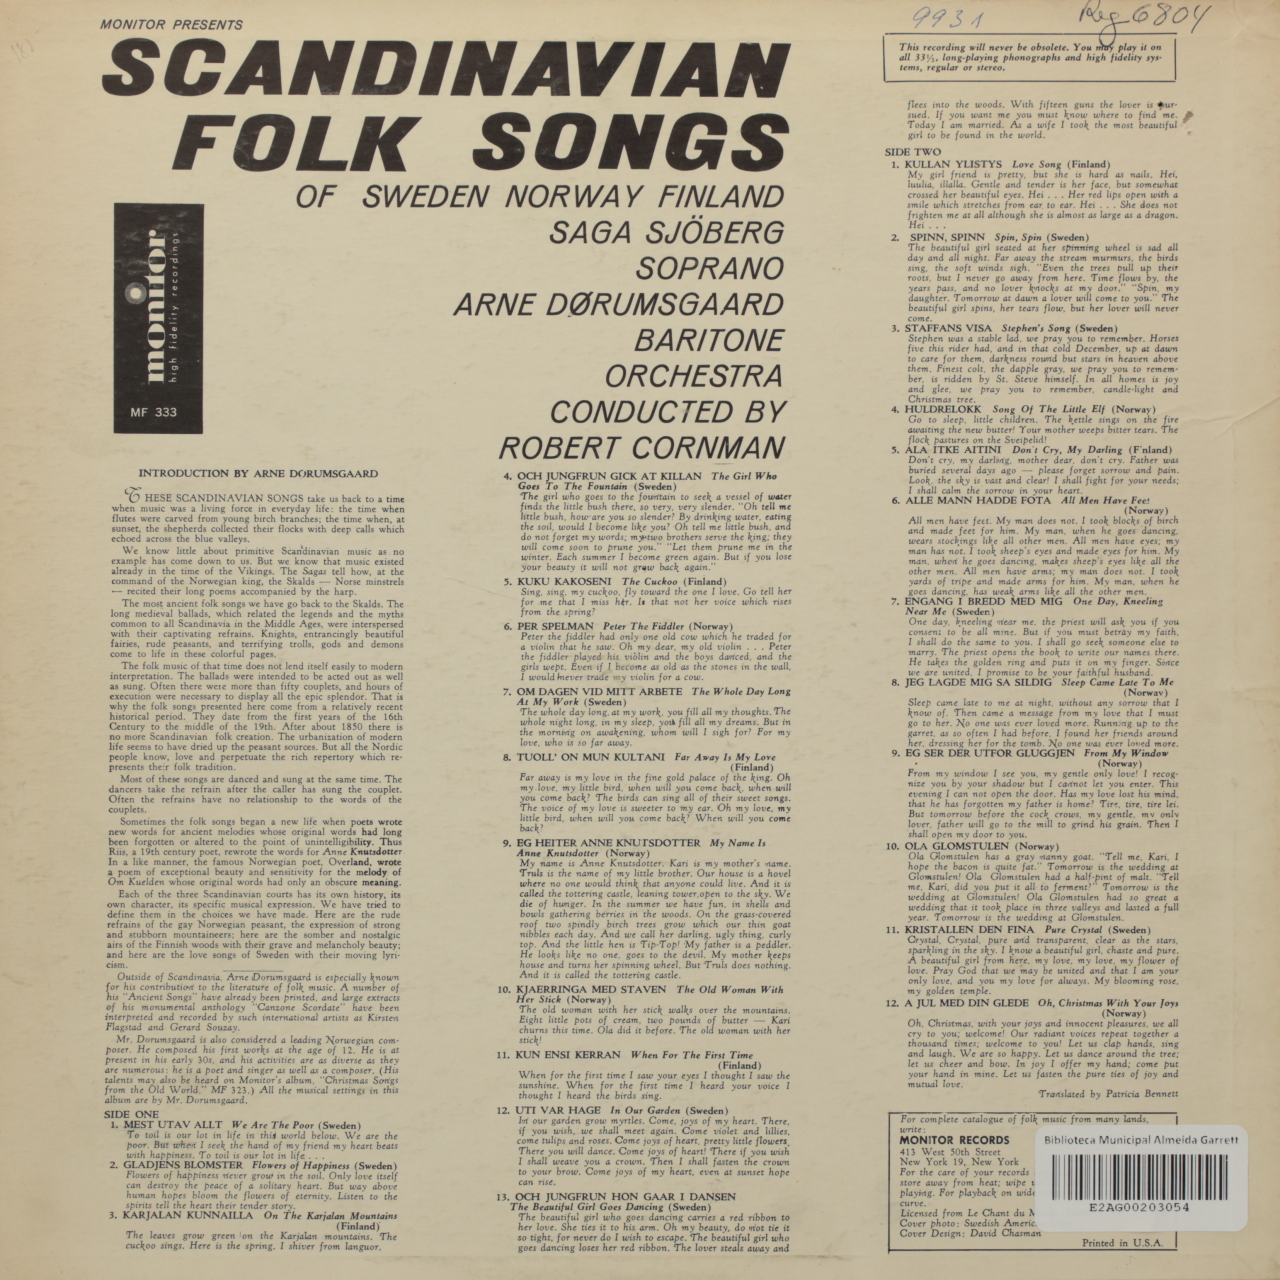 Scandinavian Folk Songs - Music of Sweden, Norway and Finland